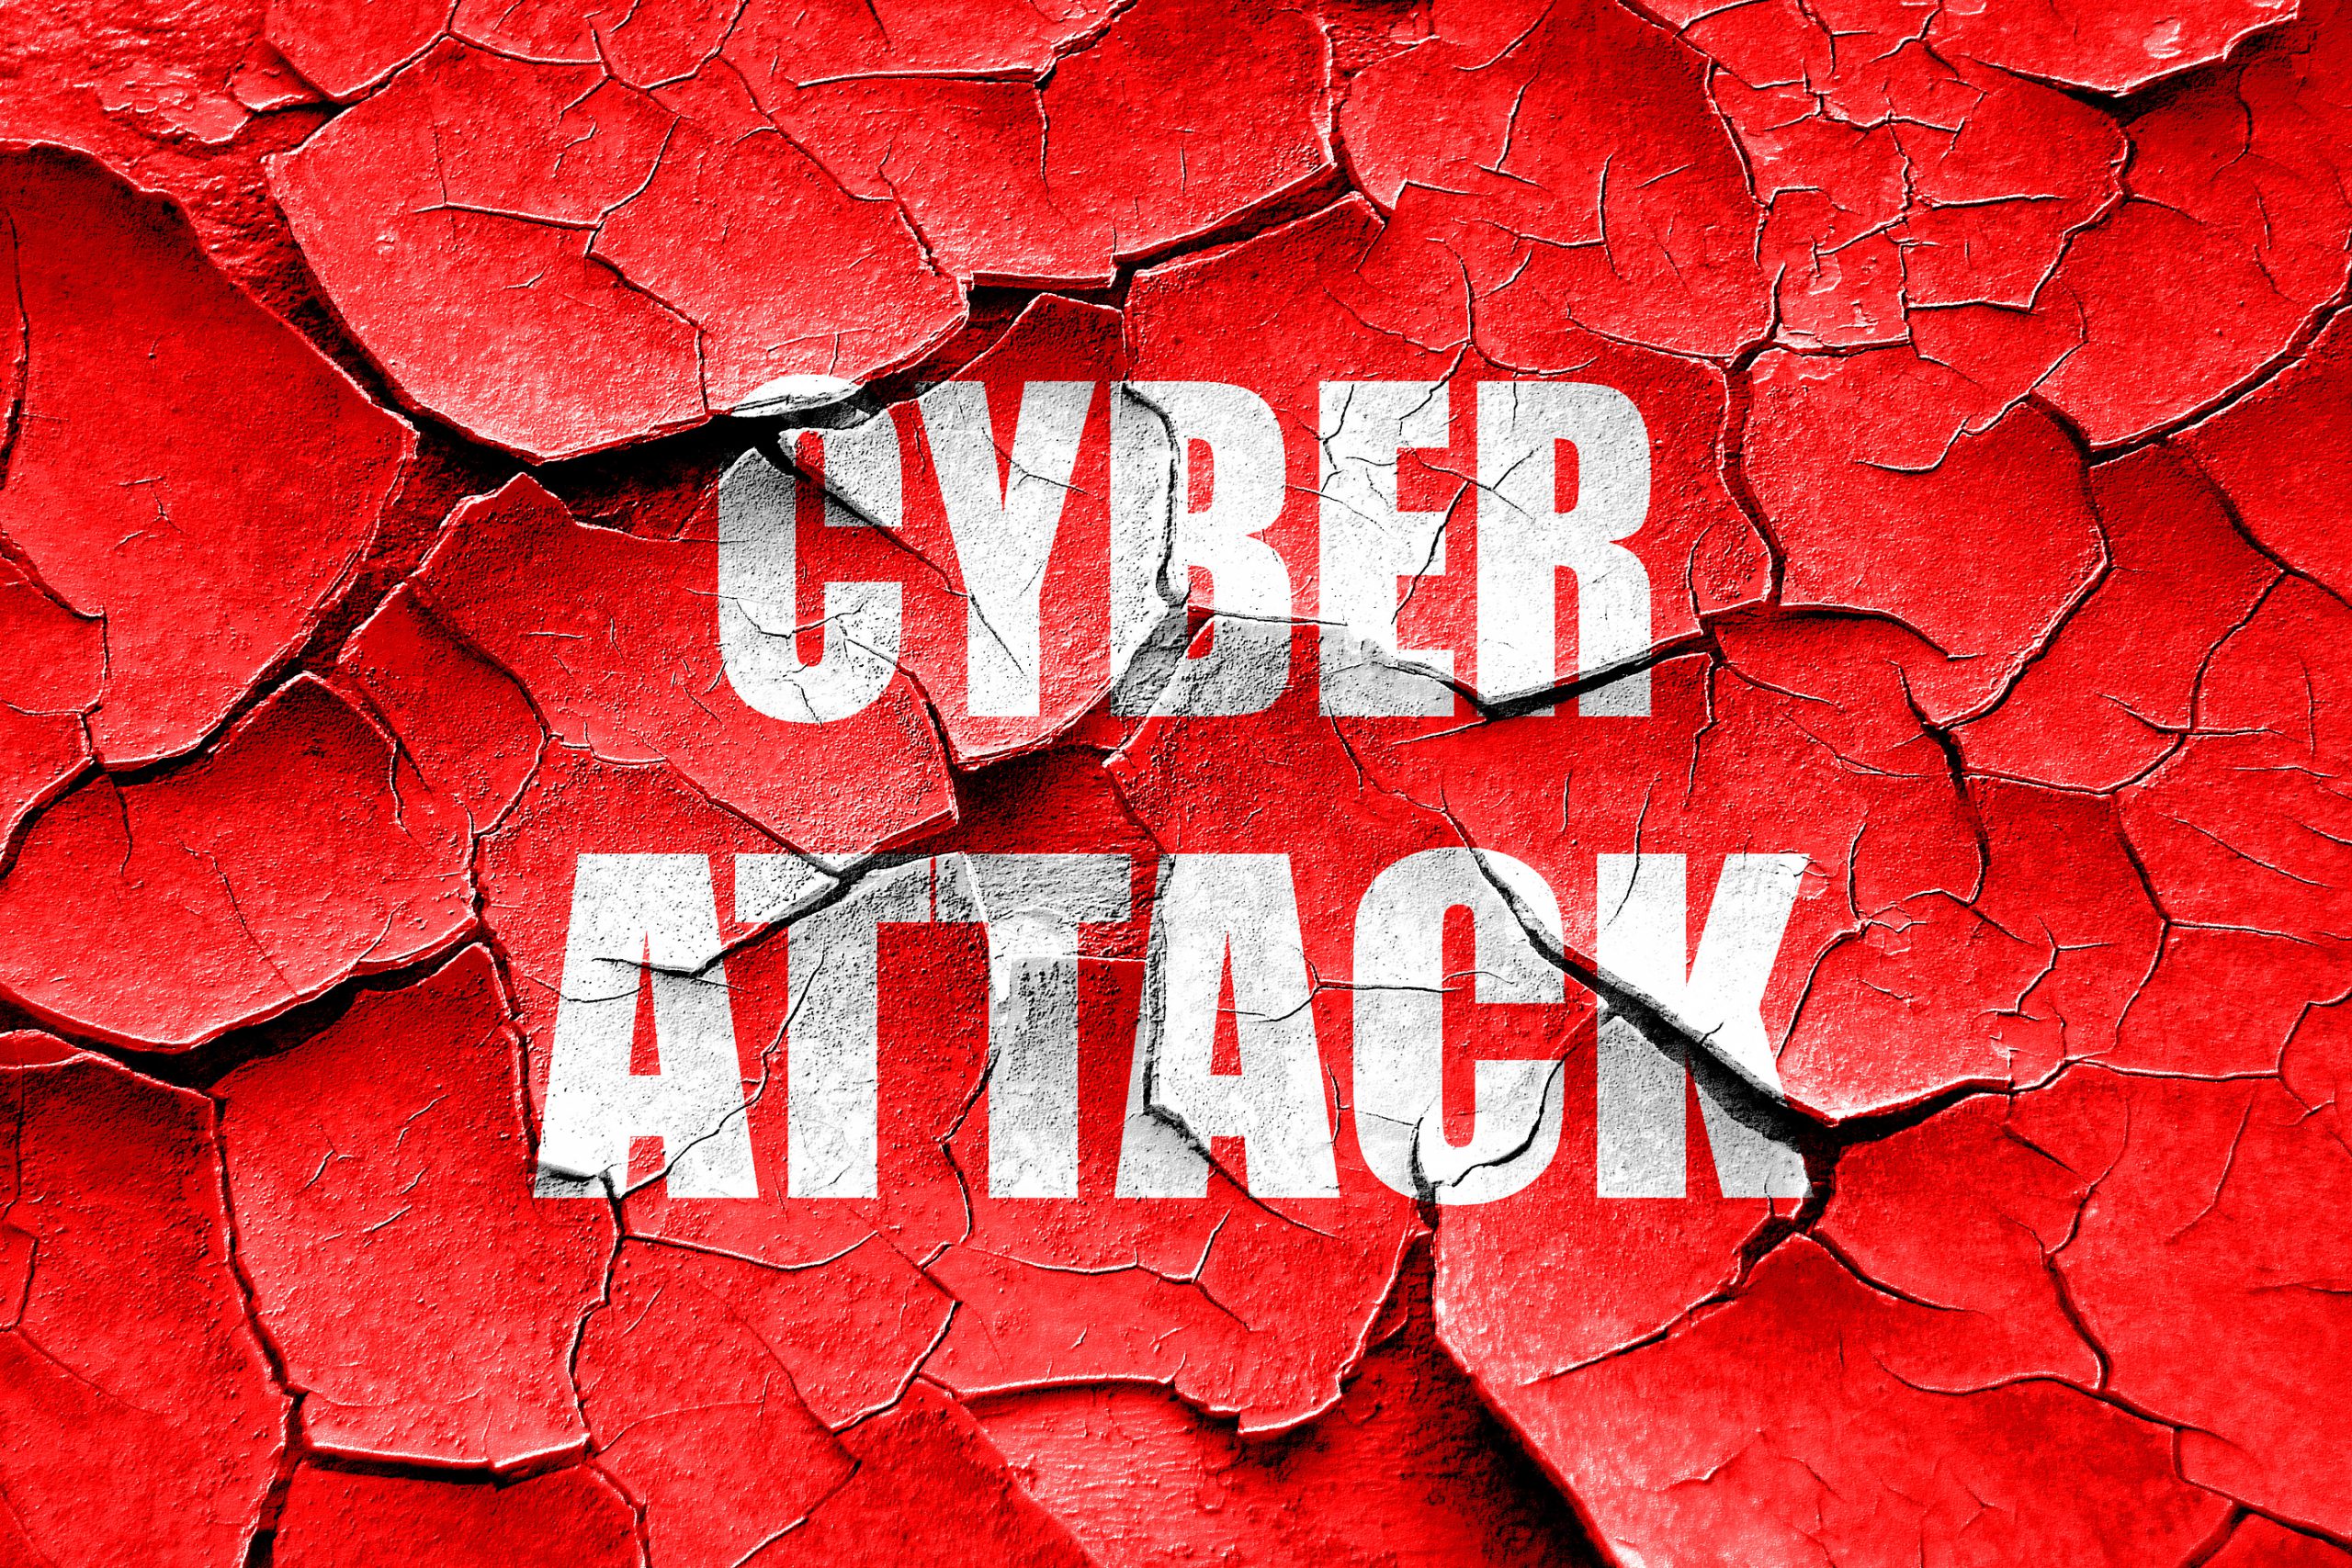 BS_Cyber warfare background_Argus456_123681665